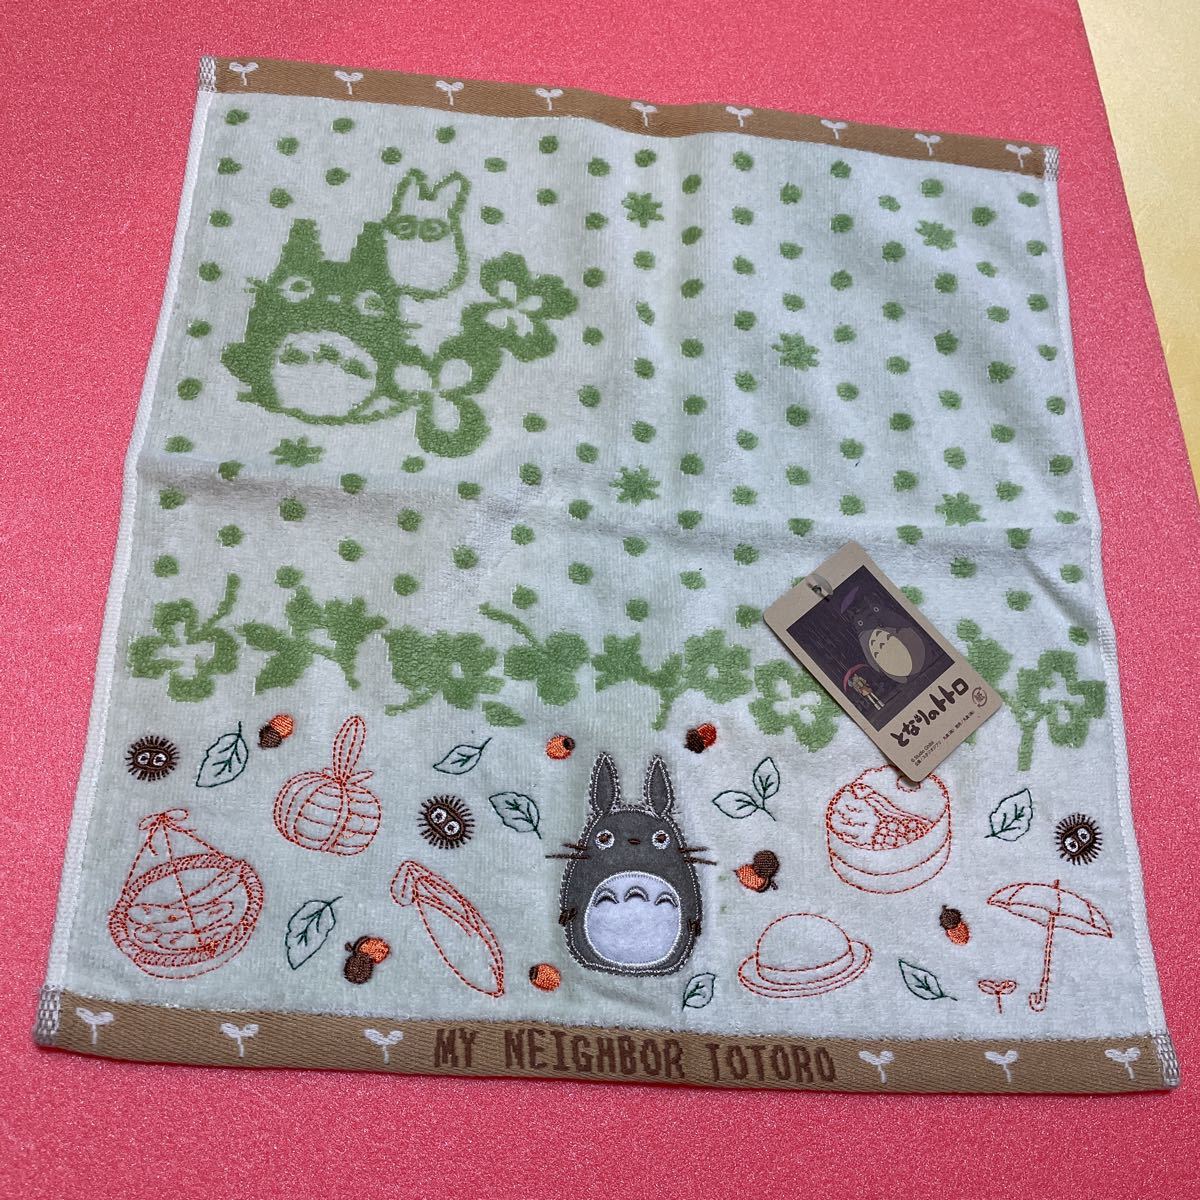  Tonari no Totoro полотенце для рук 3 шт. комплект номер 7